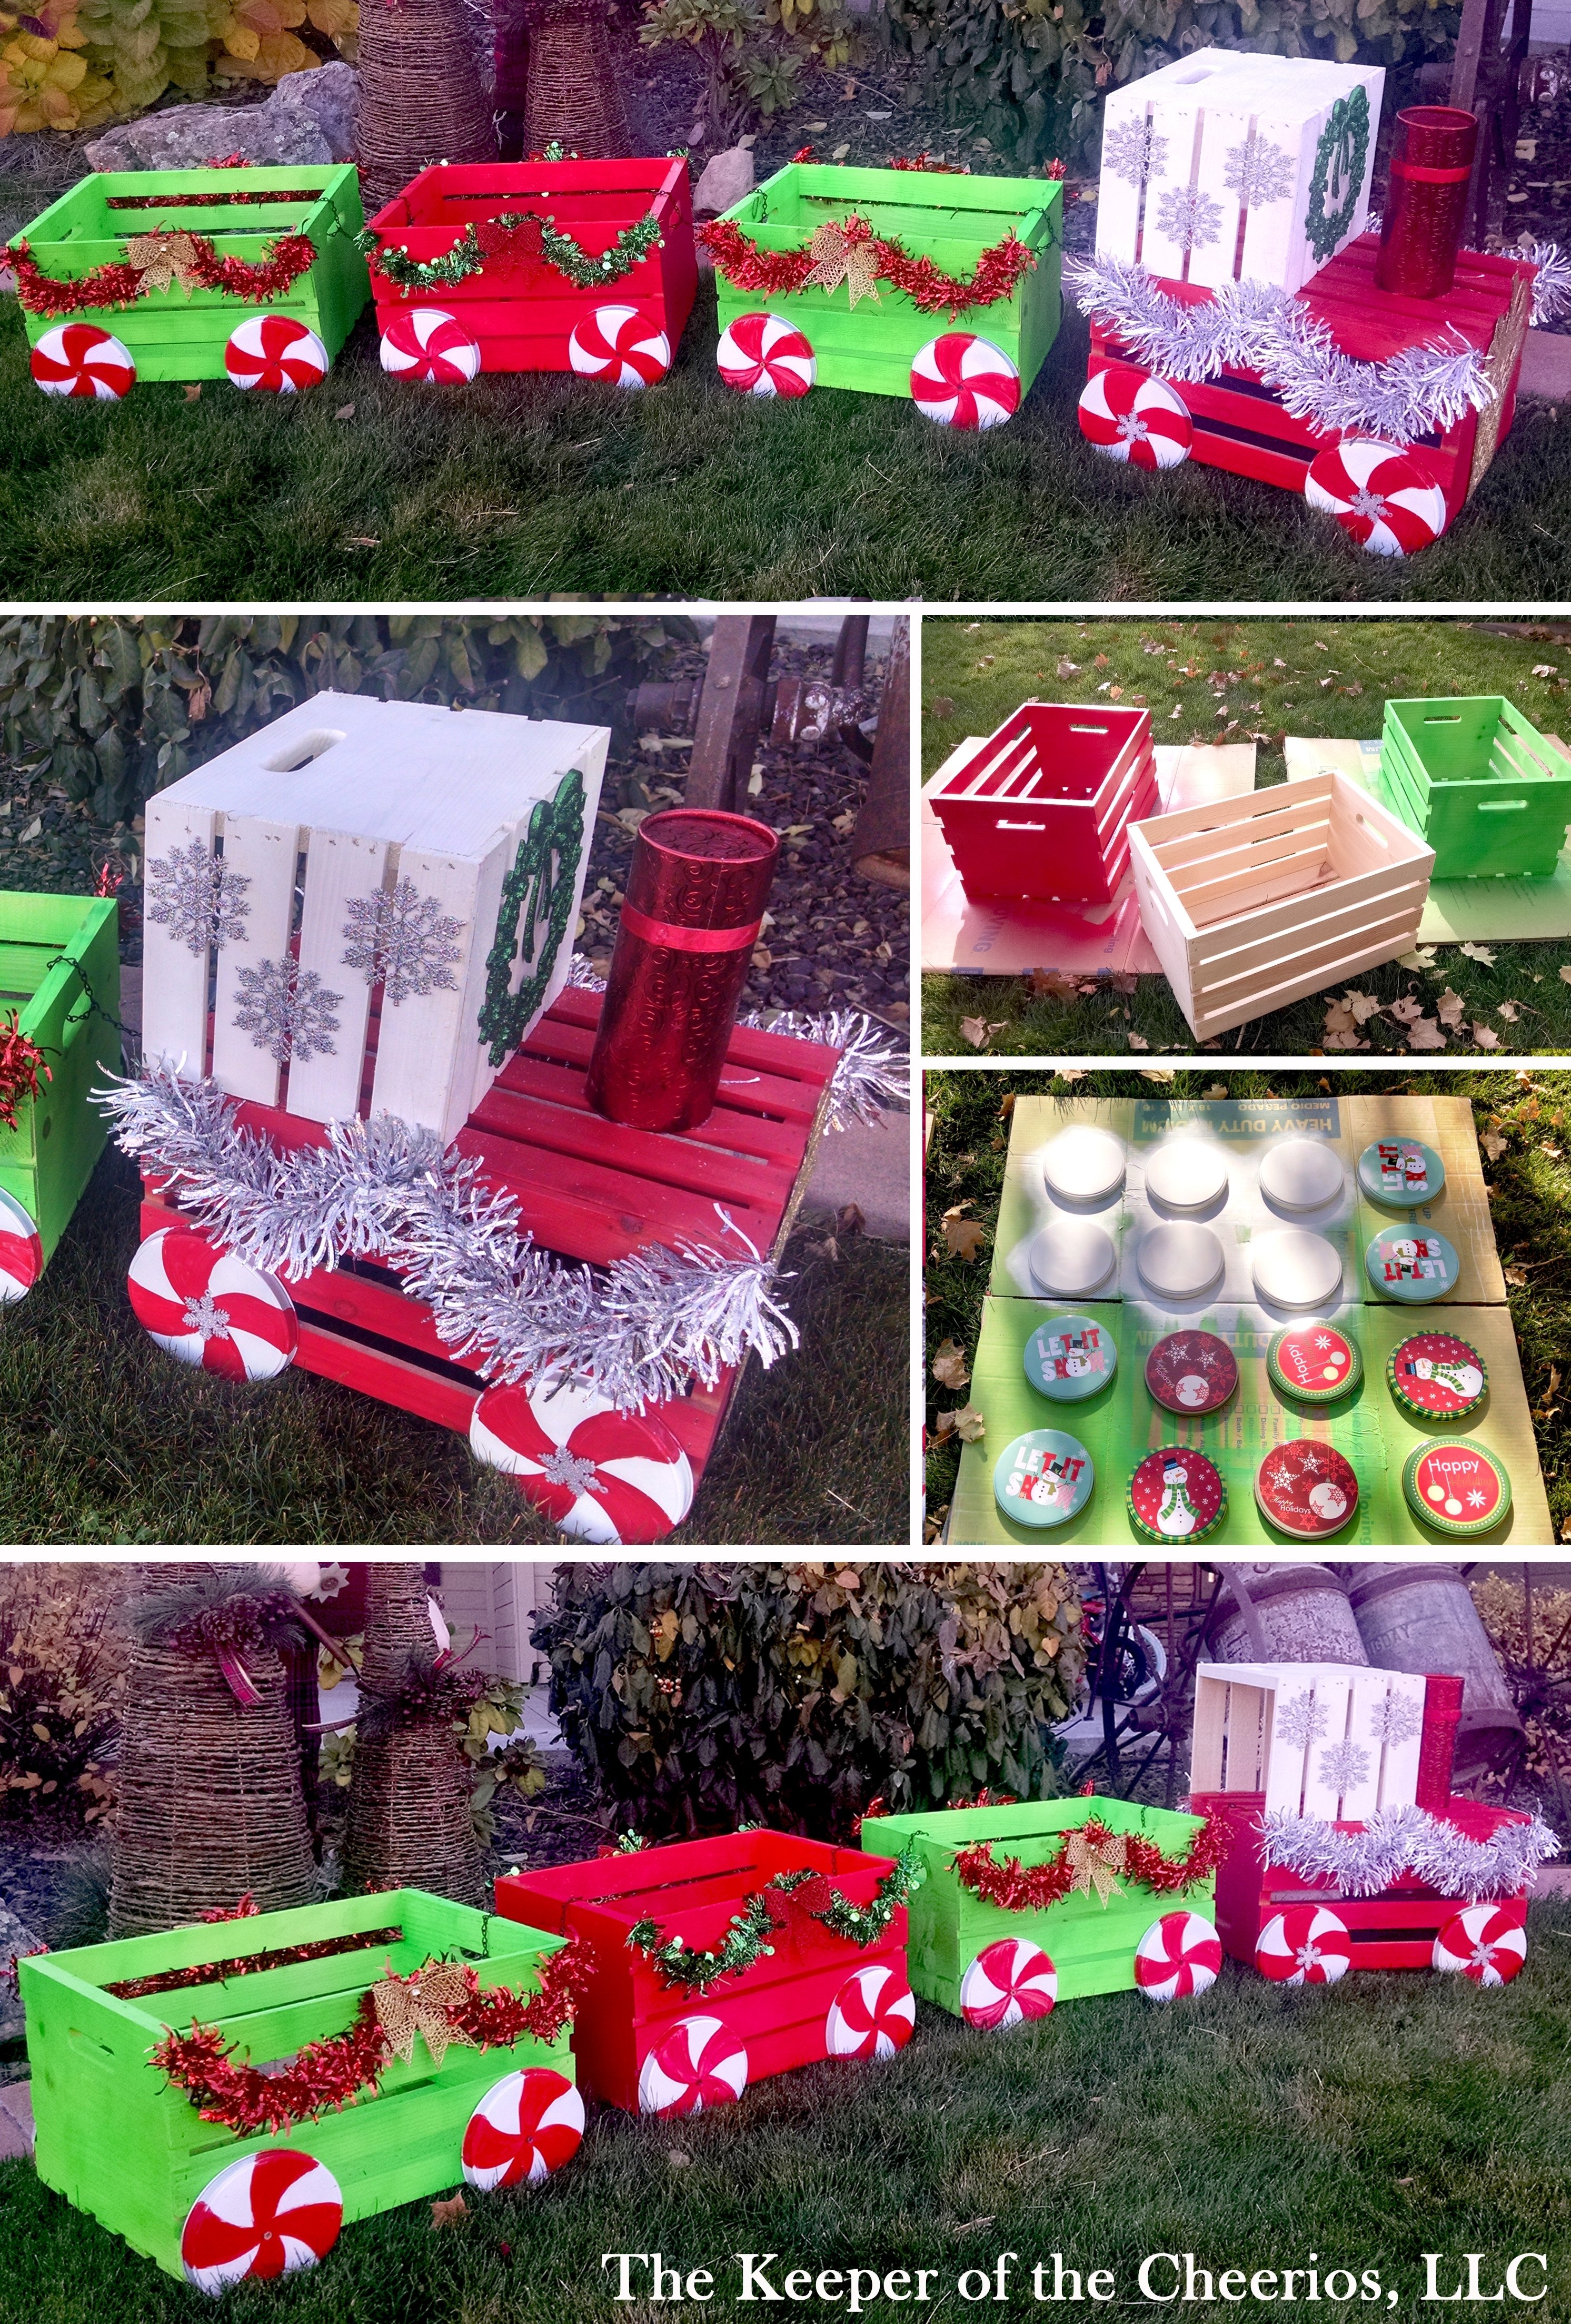 10 Ideal Diy Outdoor Christmas Decorating Ideas diy outdoor lawn christmas decorations psoriasisguru 2022